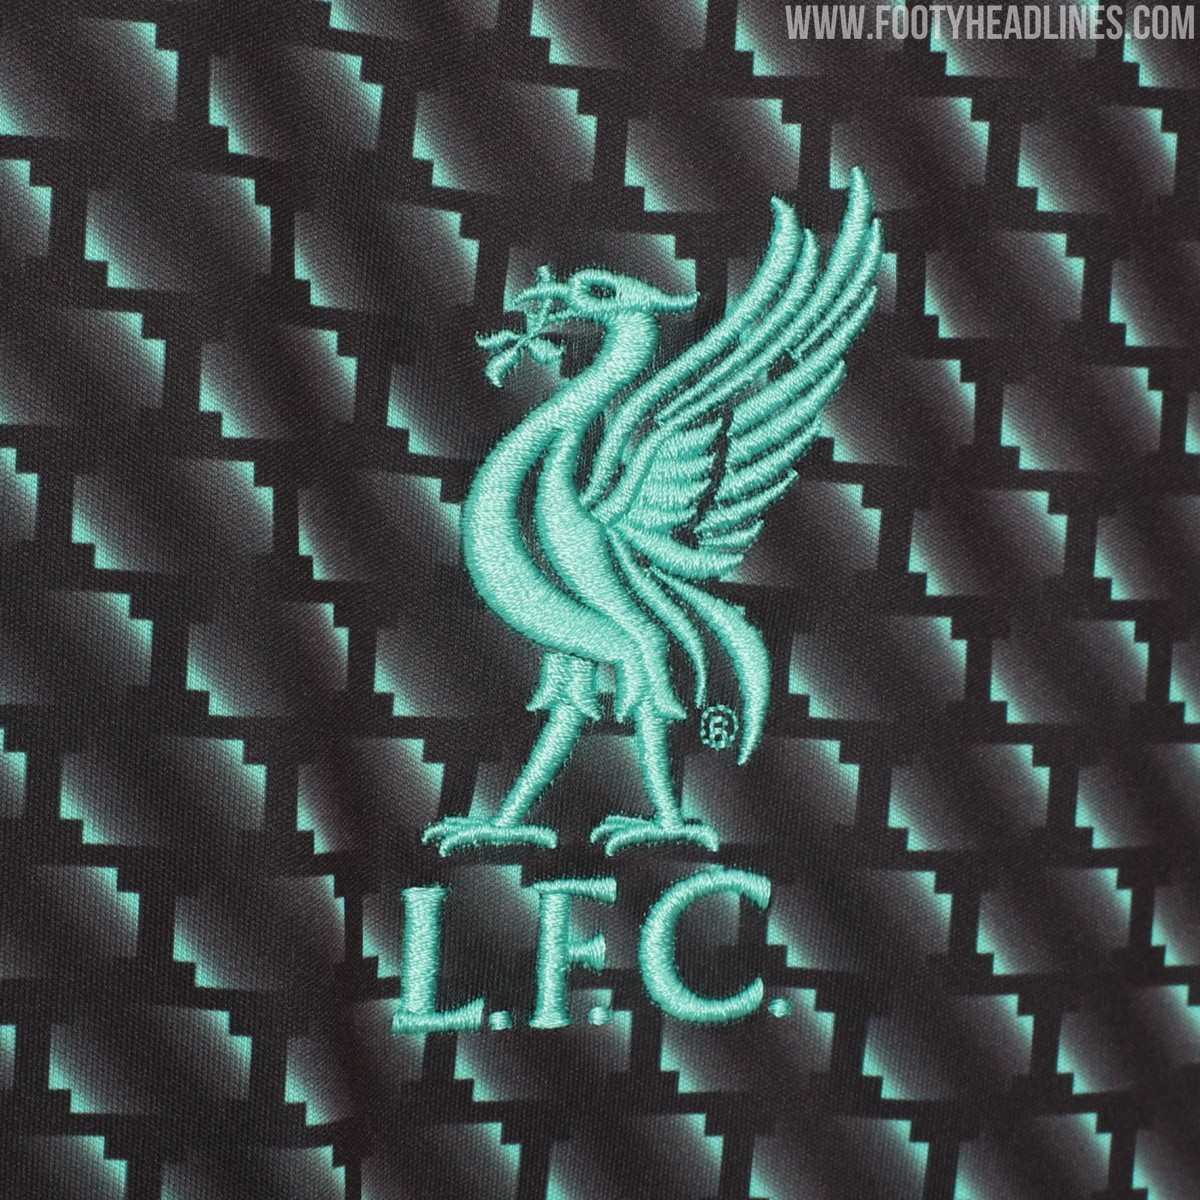 Liverpool 19-20 Third Kit Released - Footy Headlines